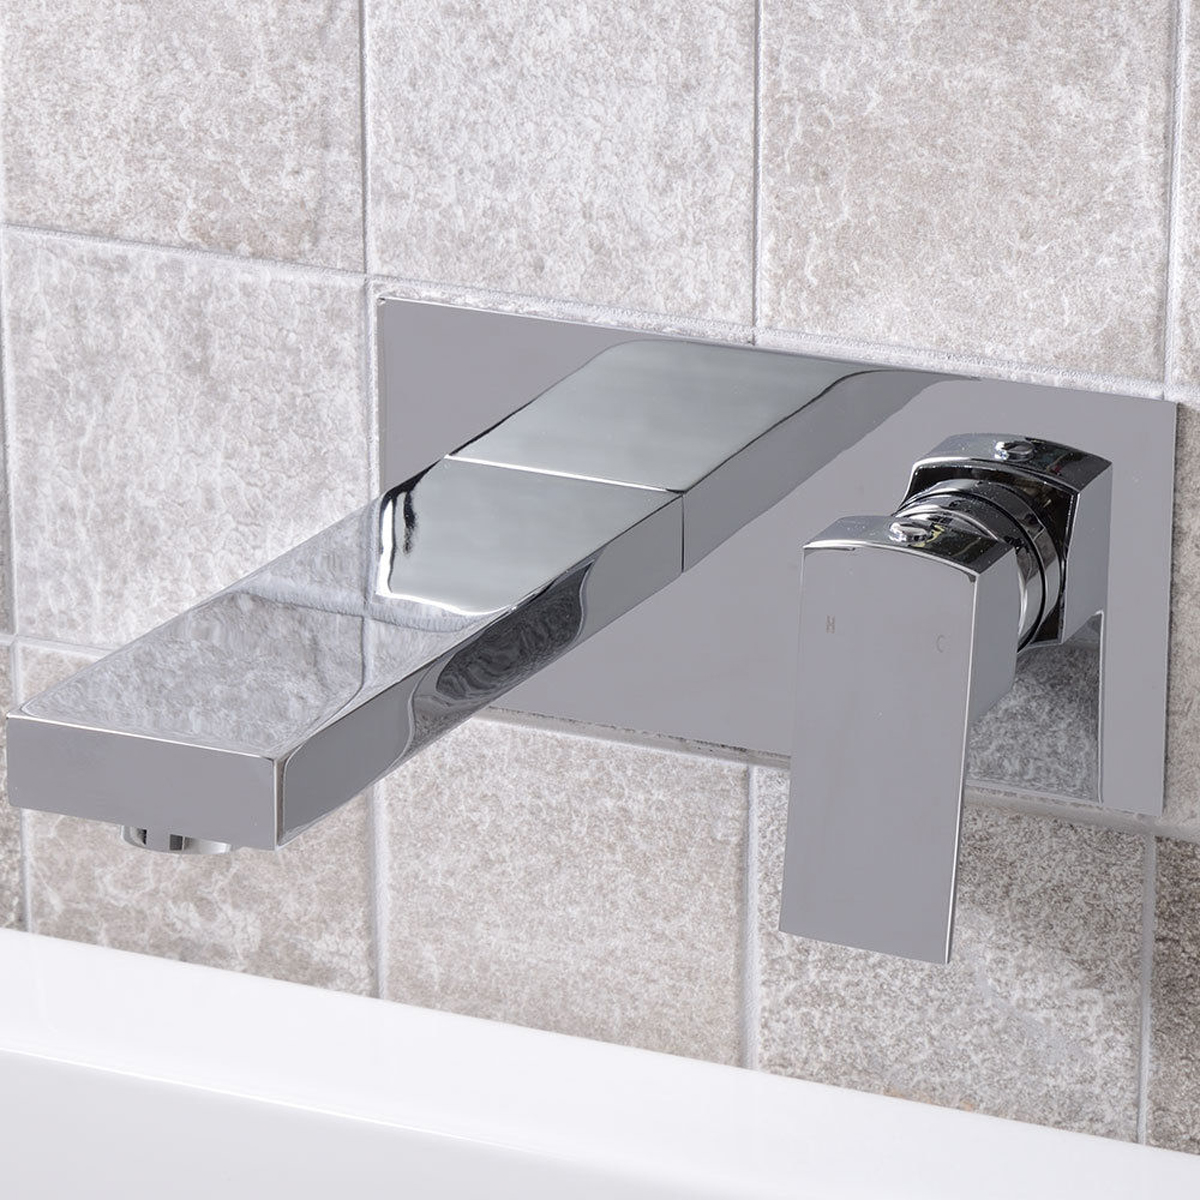 Bathroom-Bath-Tub-Modern-Chrome-Brass-Wall-Mounted-Mixer-Faucet-Tap-1330955